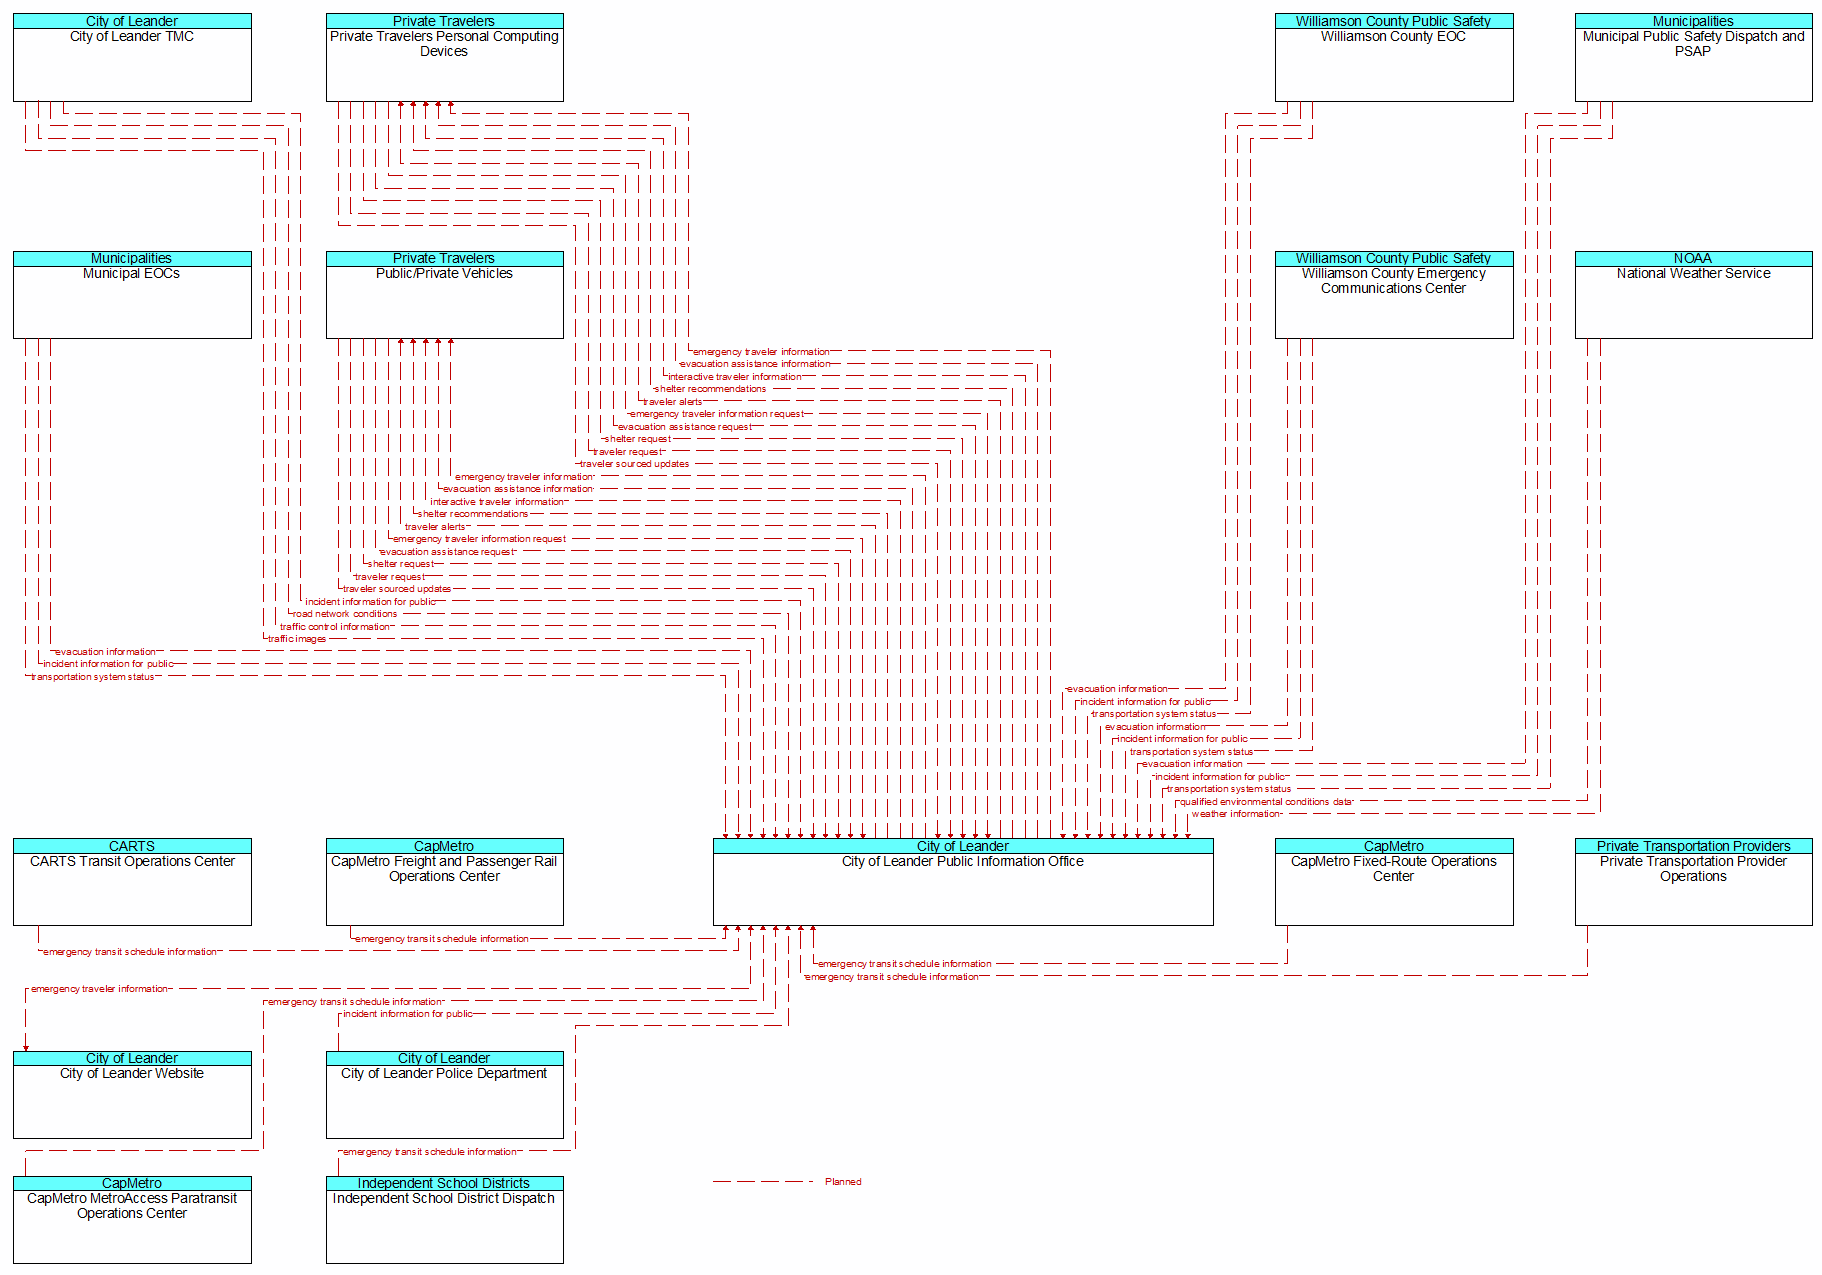 Context Diagram - City of Leander Public Information Office